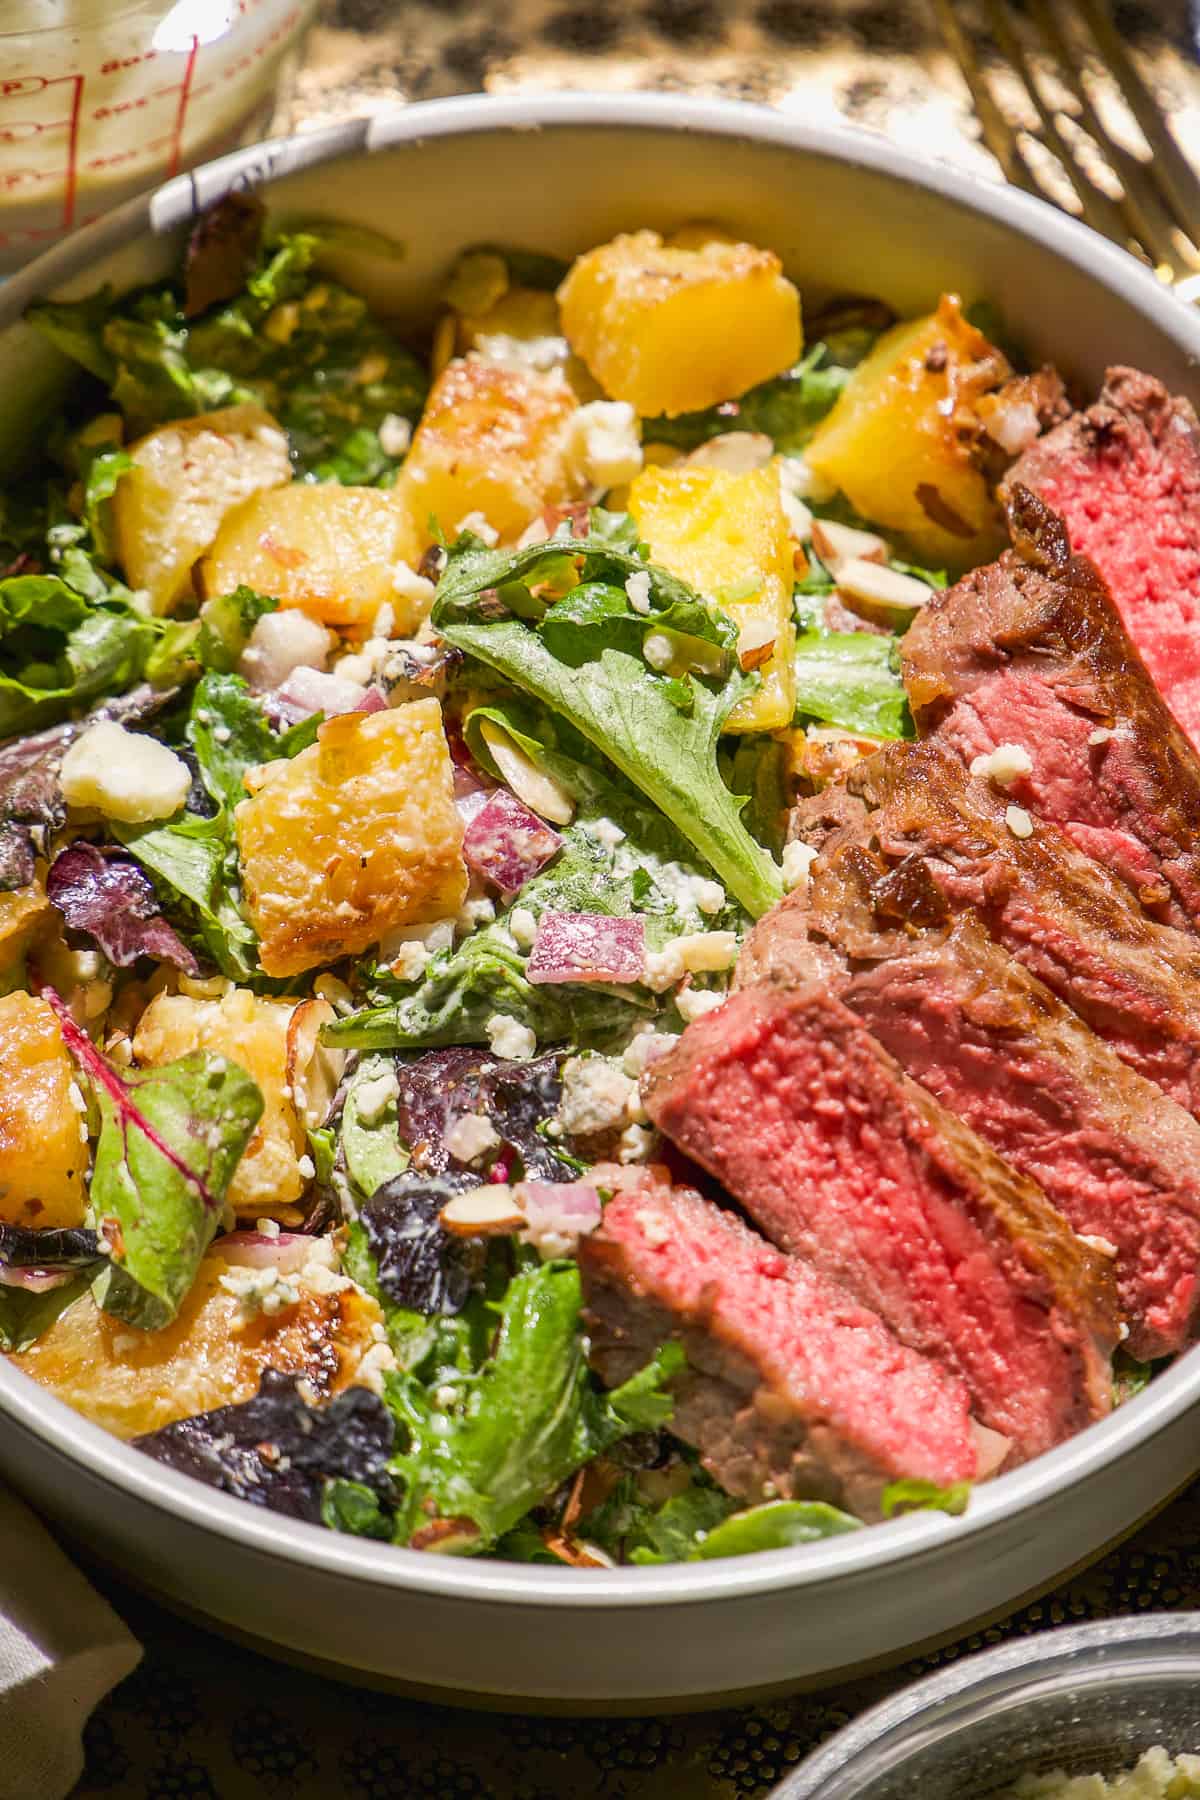 Steak salad with gorgonzola dressing on a plate.